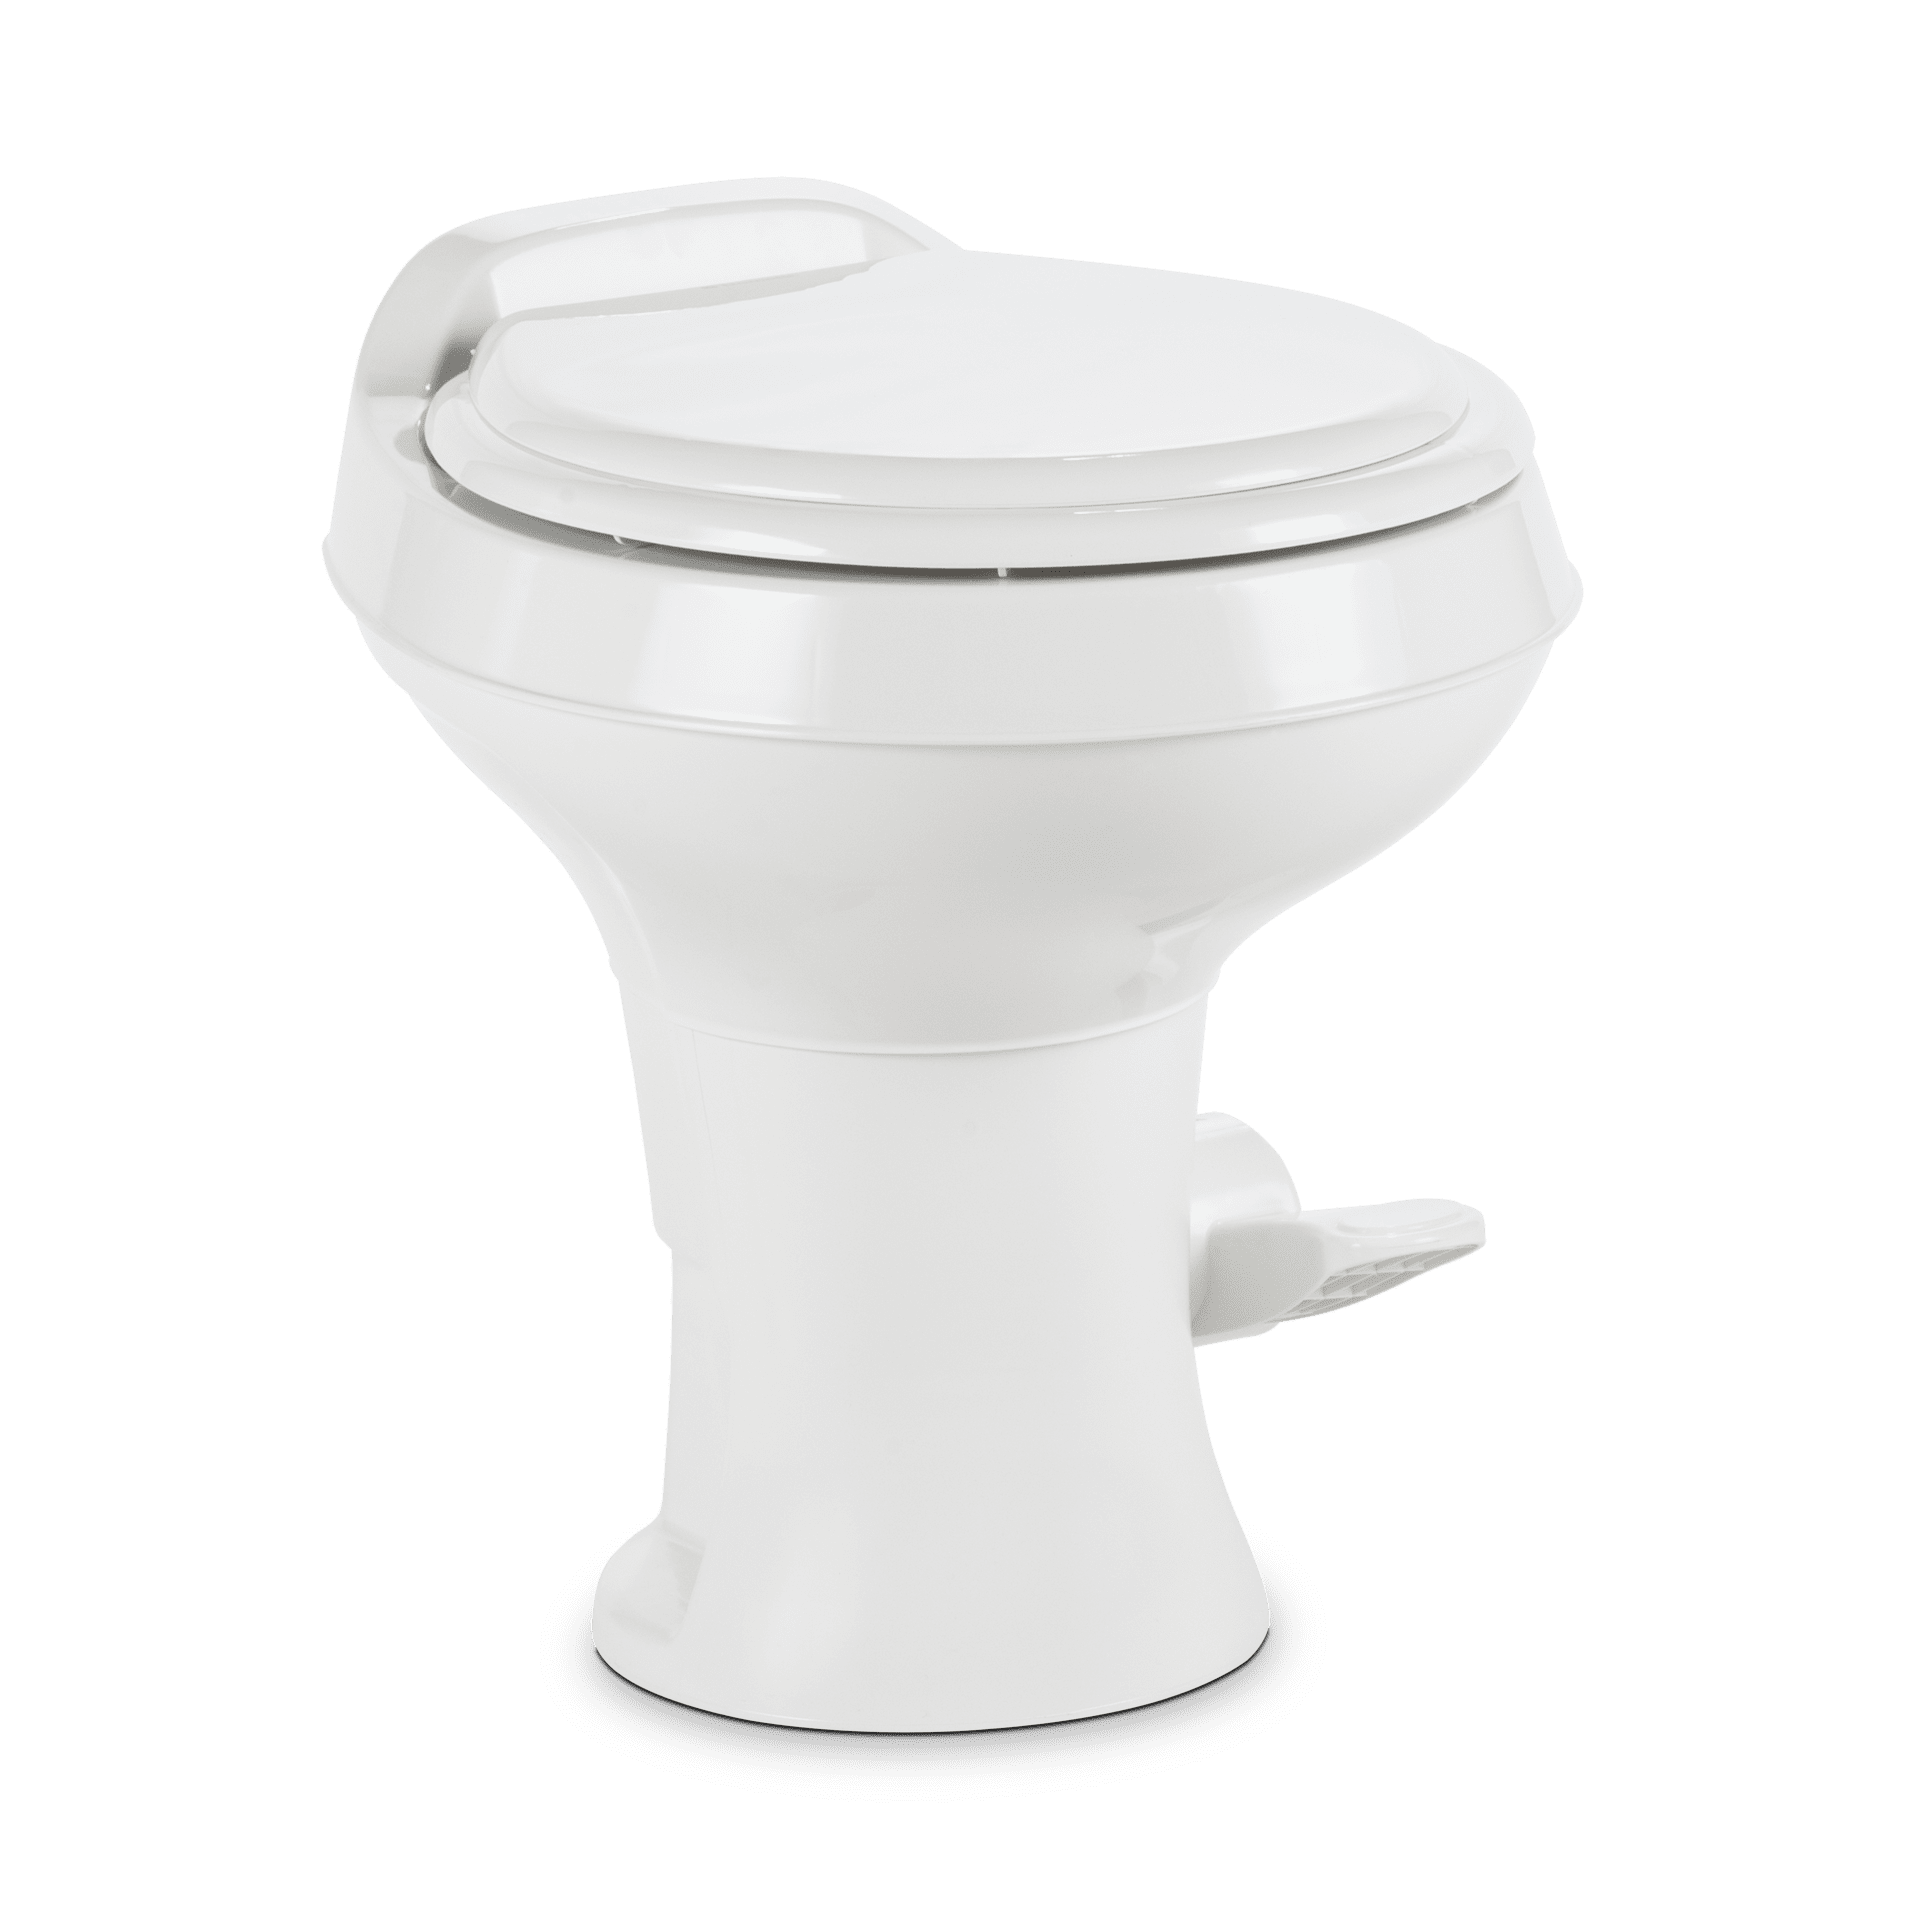 Sealand Dometic 300 Gravity Toilet Spare Parts